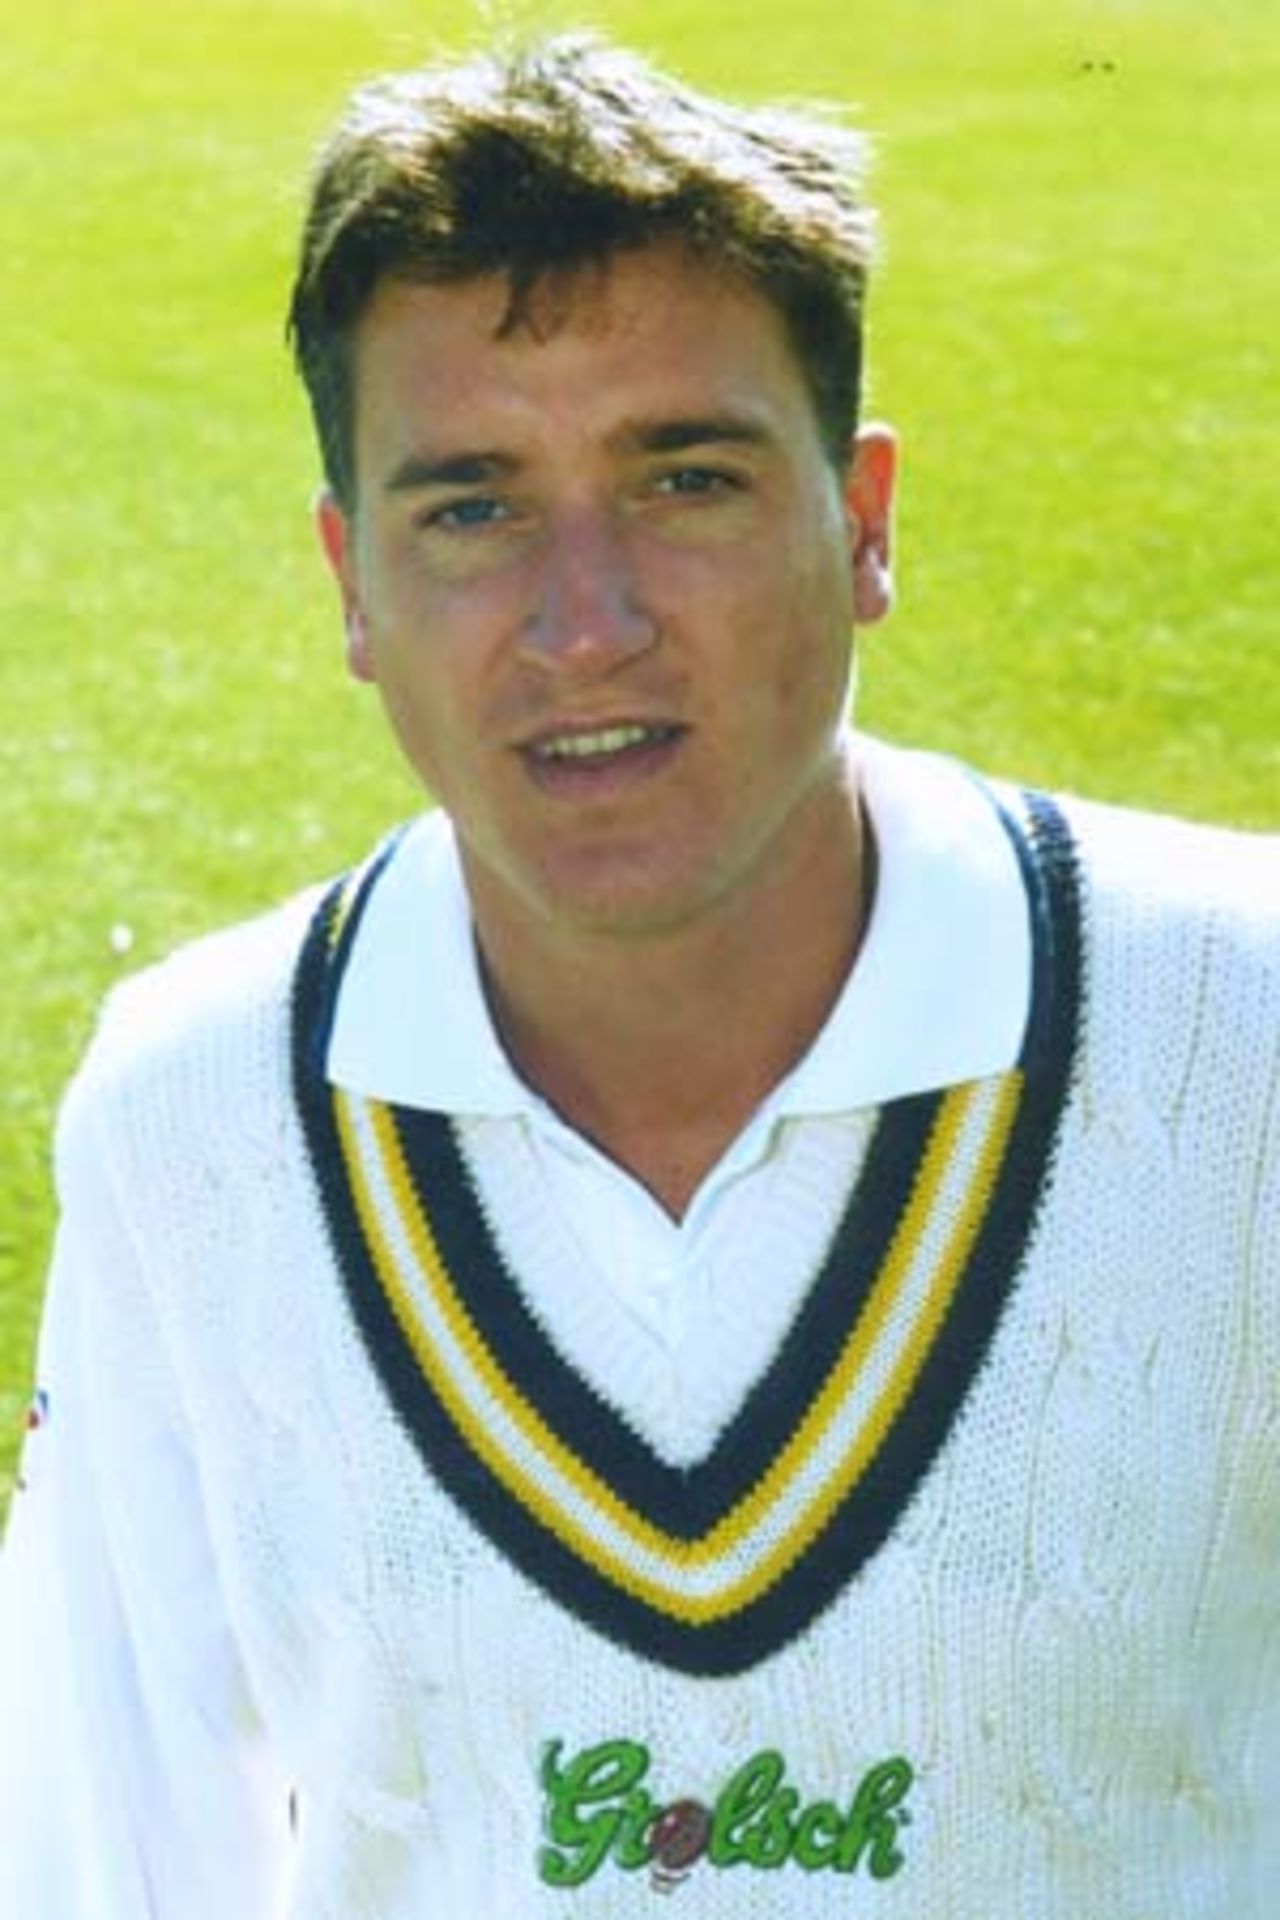 Giles White, Hampshire batsman